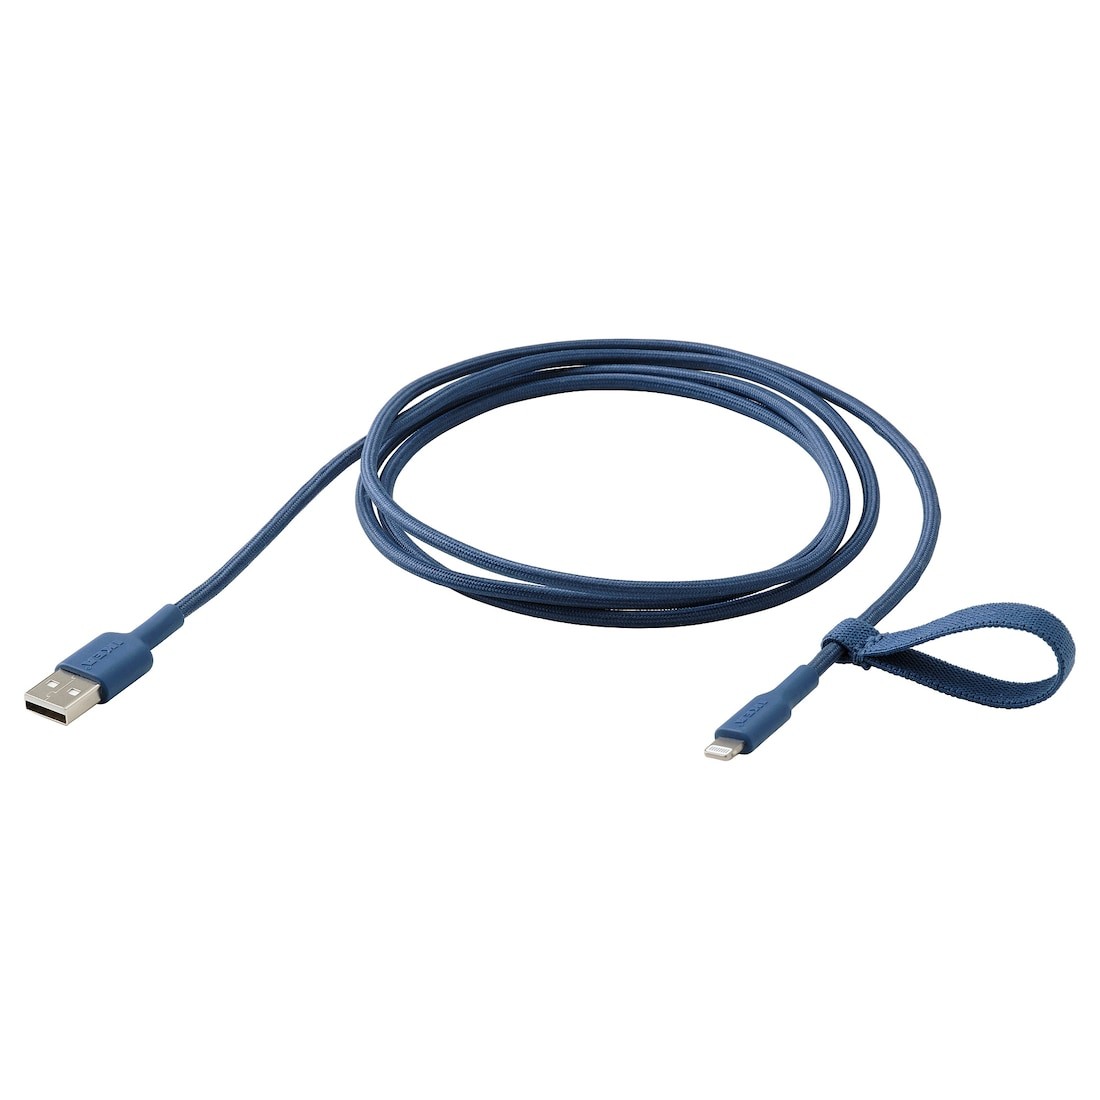 LILLHULT ЛІЛЛЬХУЛЬТ Кабель USB-A lightning, блакитний, 1.5 м